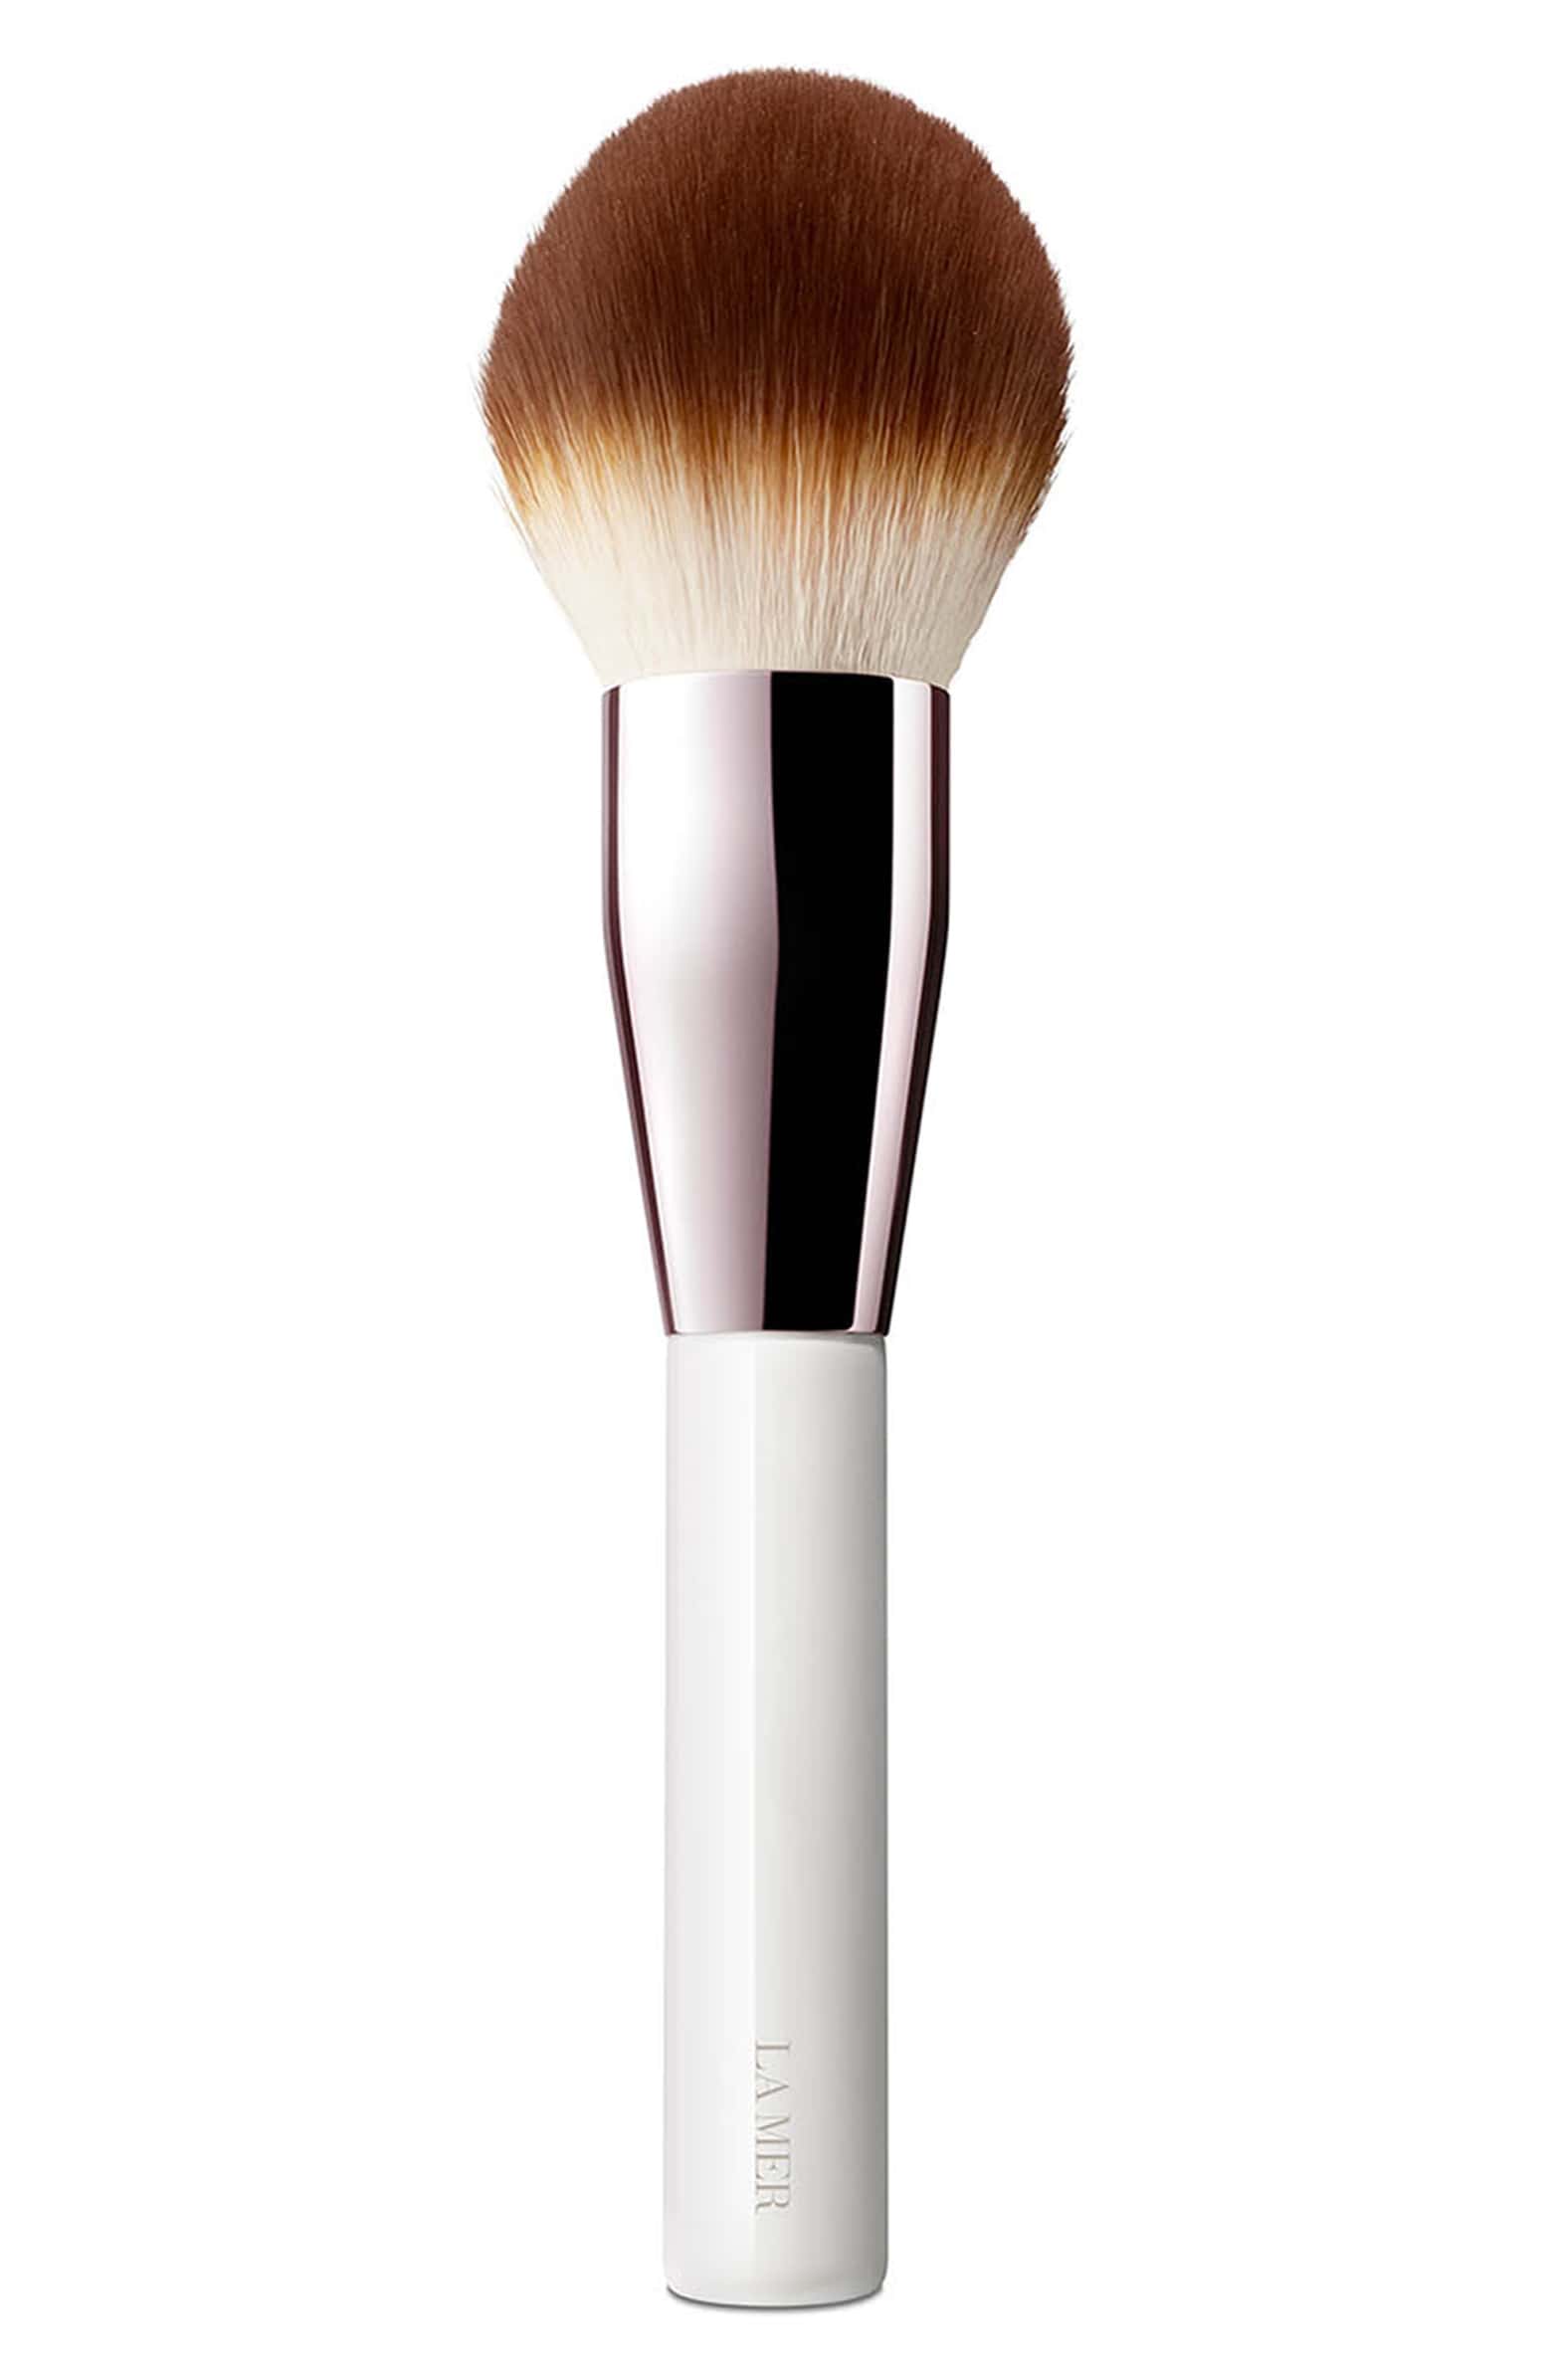 https://cdn.cliqueinc.com/posts/279131/how-to-clean-makeup-brushes-279131-1554541787198-product.700x0c.jpg